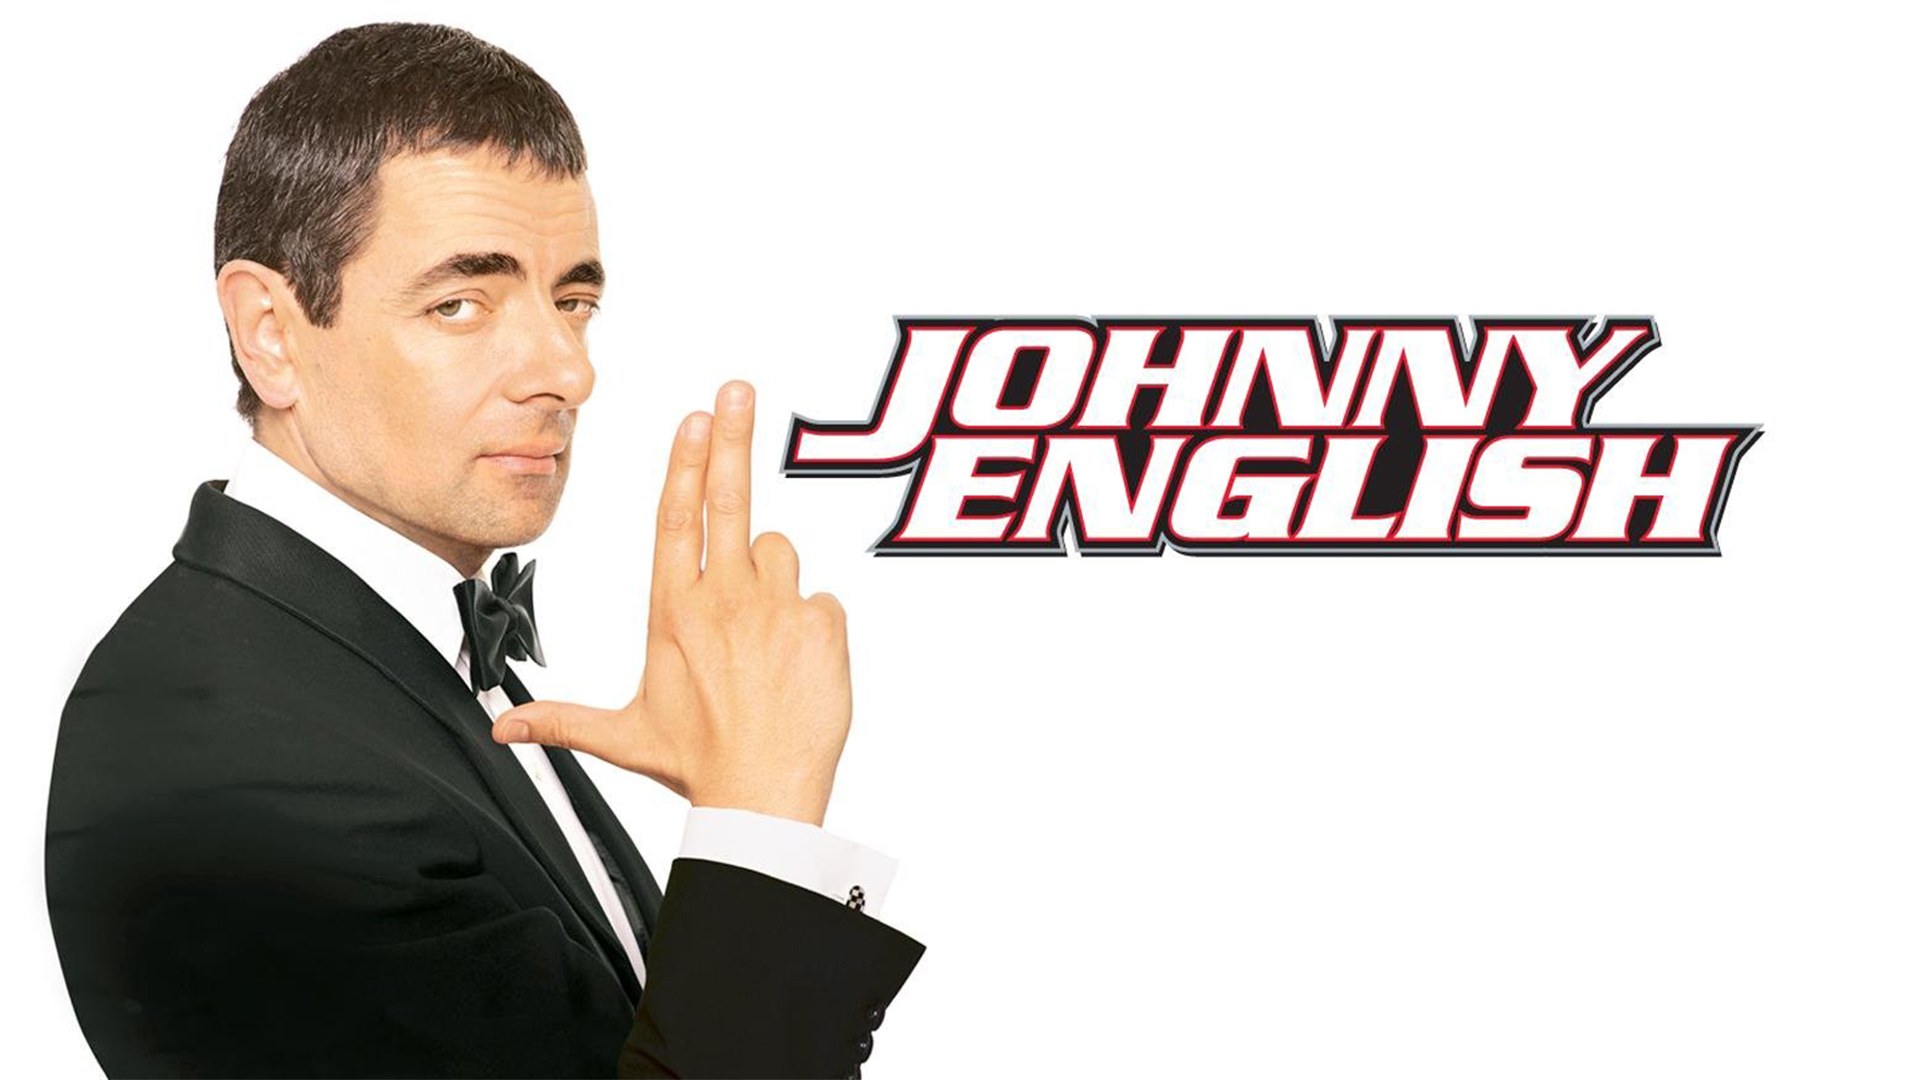 Johnny English (2003) Google Drive Download